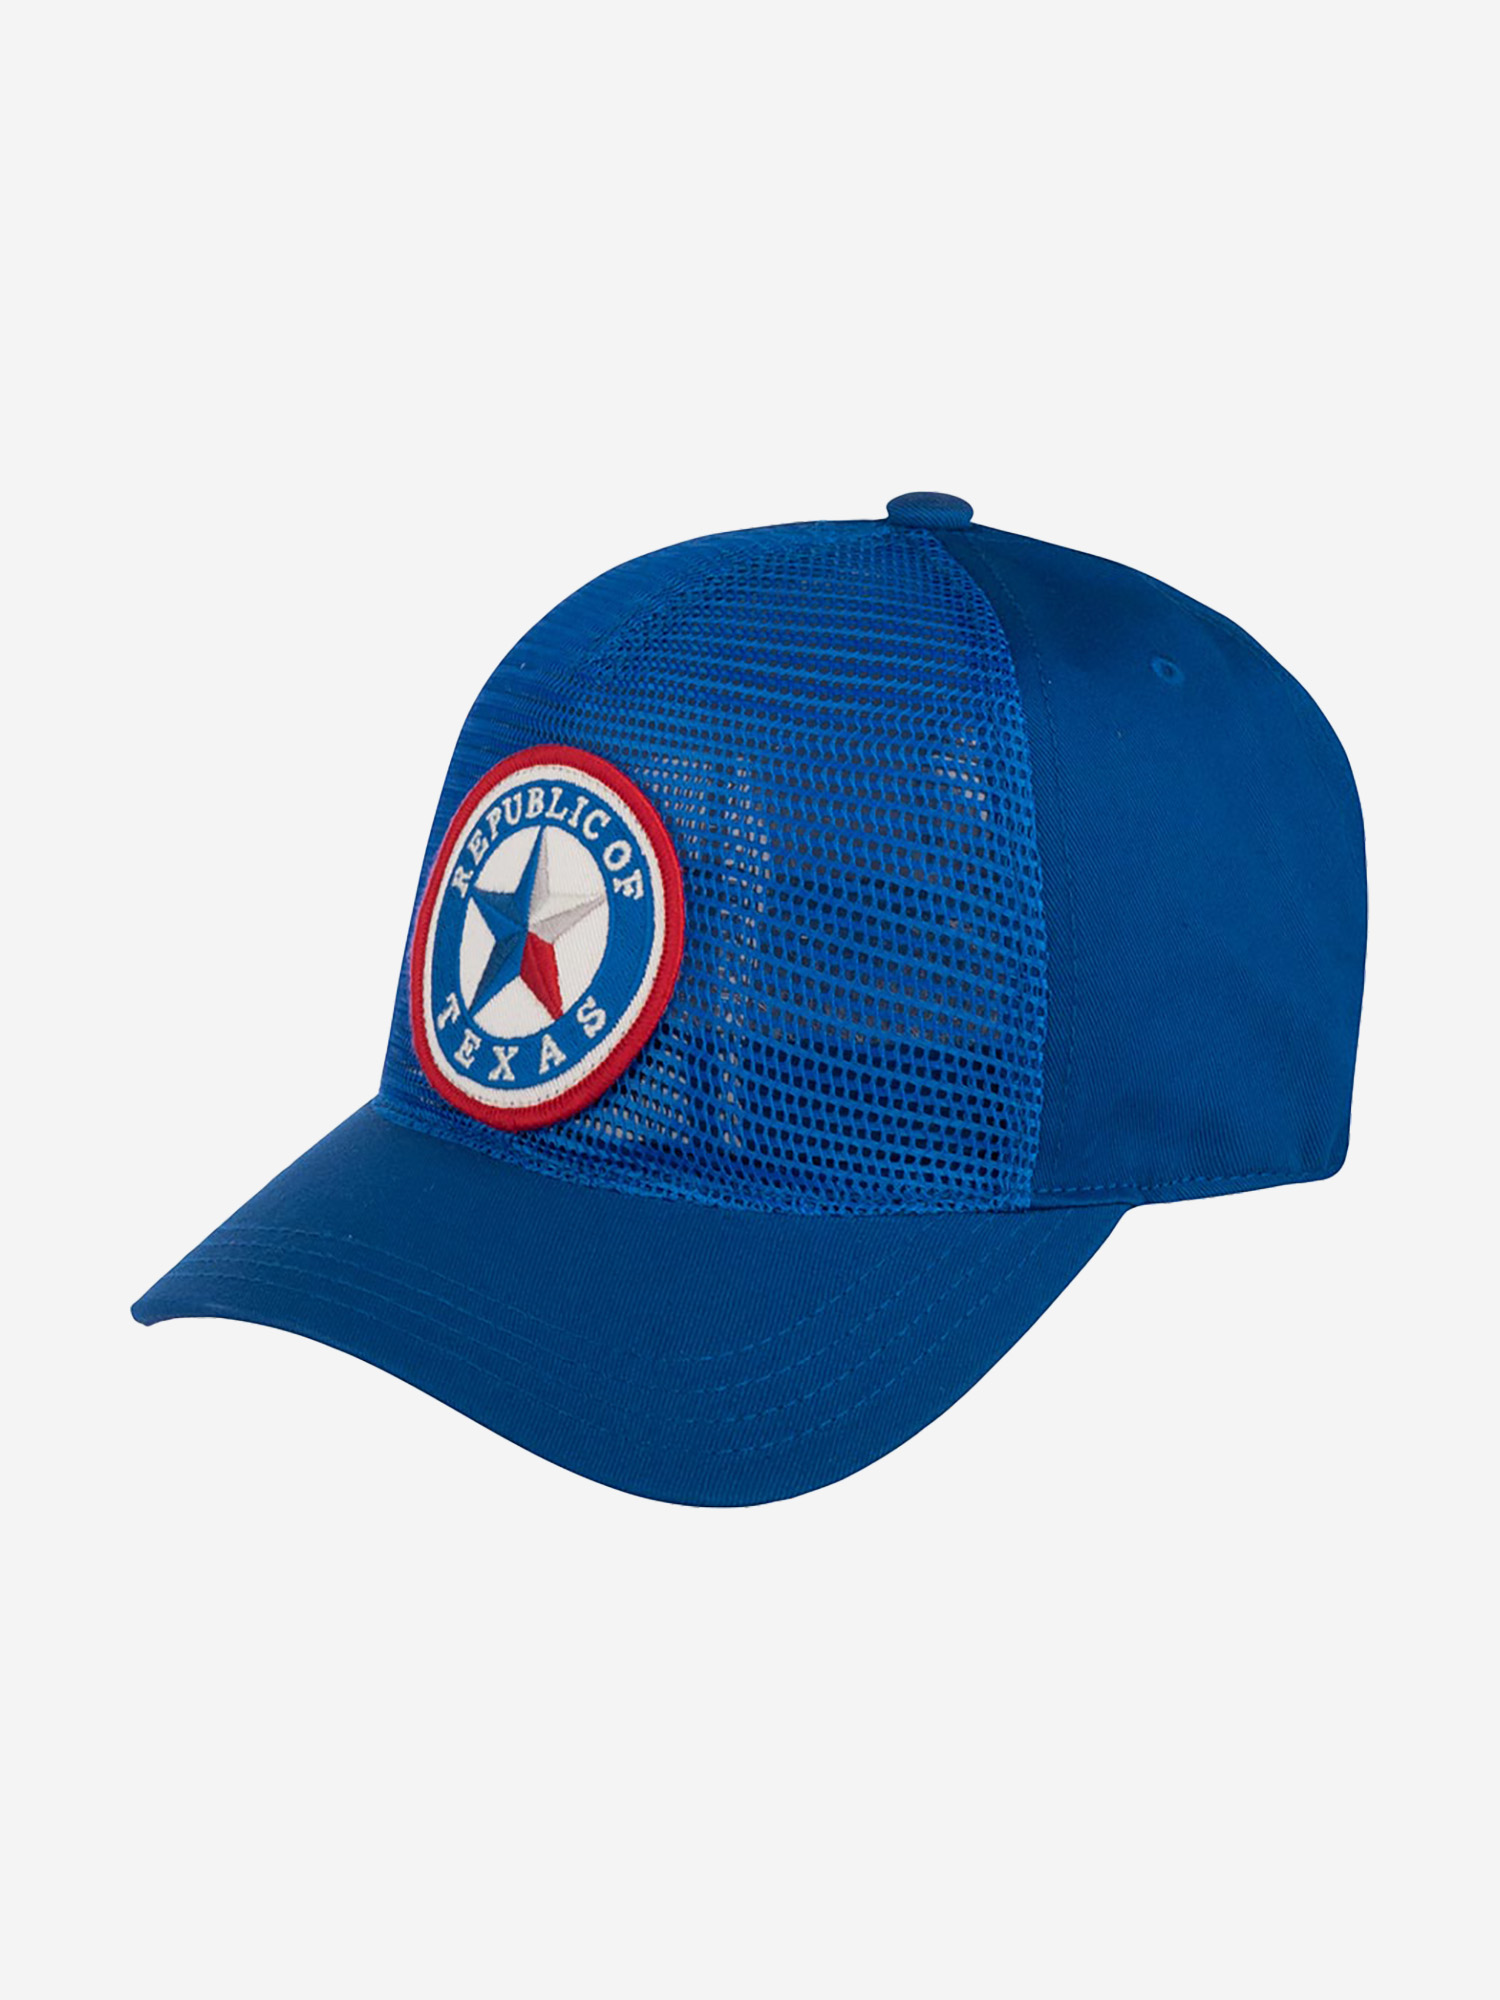 Бейсболка AMERICAN NEEDLE 44590A-TX Texas Durham (синий), Синий бейсболка american needle 19h006a txo texas open lightweight hepcat синий синий